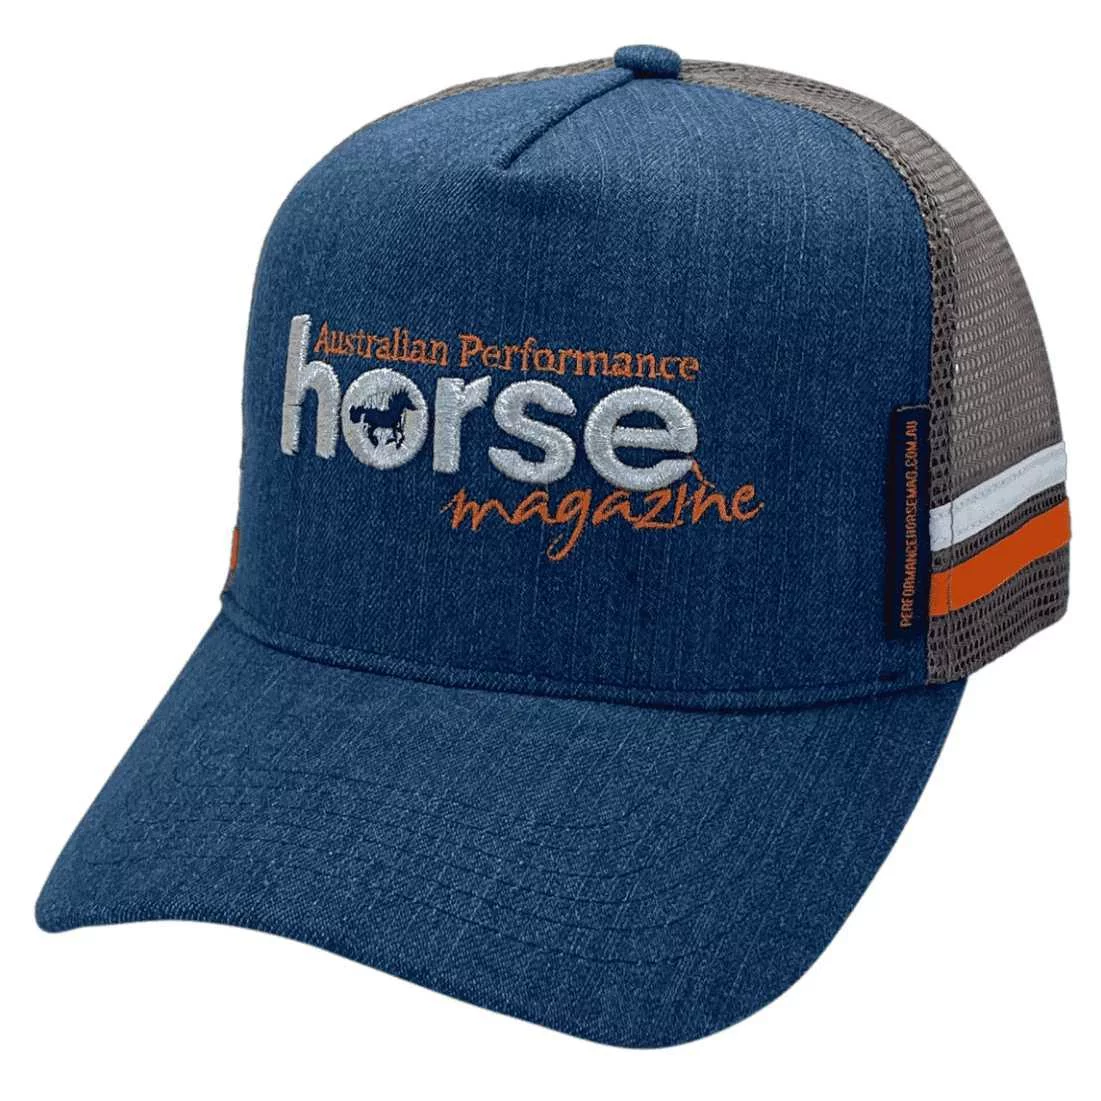 Australian Performance Horse Magazine Cooma NSW HP Custom Midrange Aussie Trucker Hat with exclusive Australian Head Fit Crown